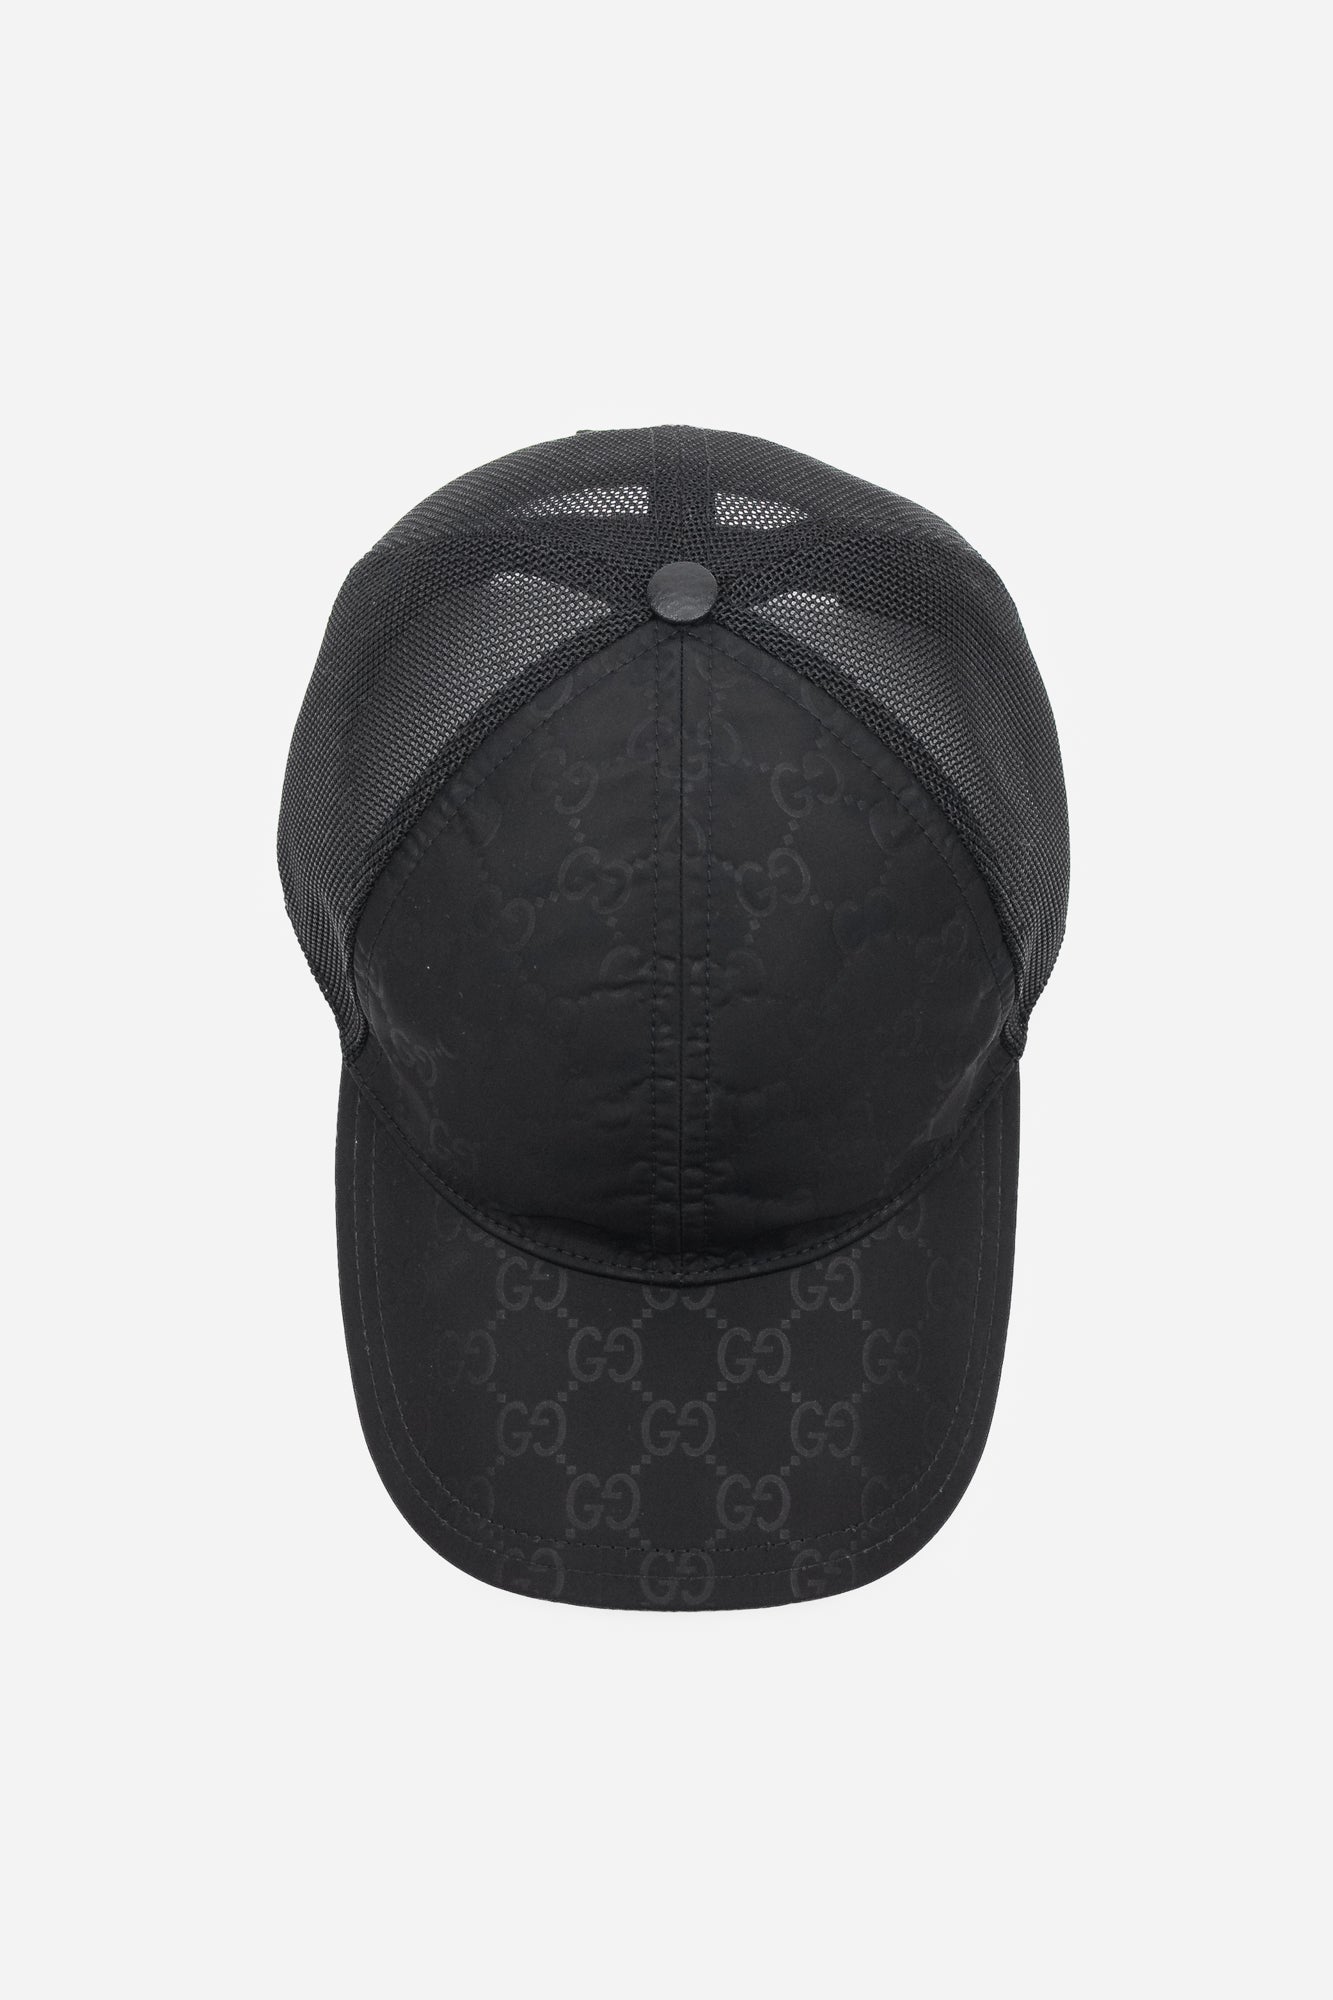 Black GG Nylon Baseball Cap